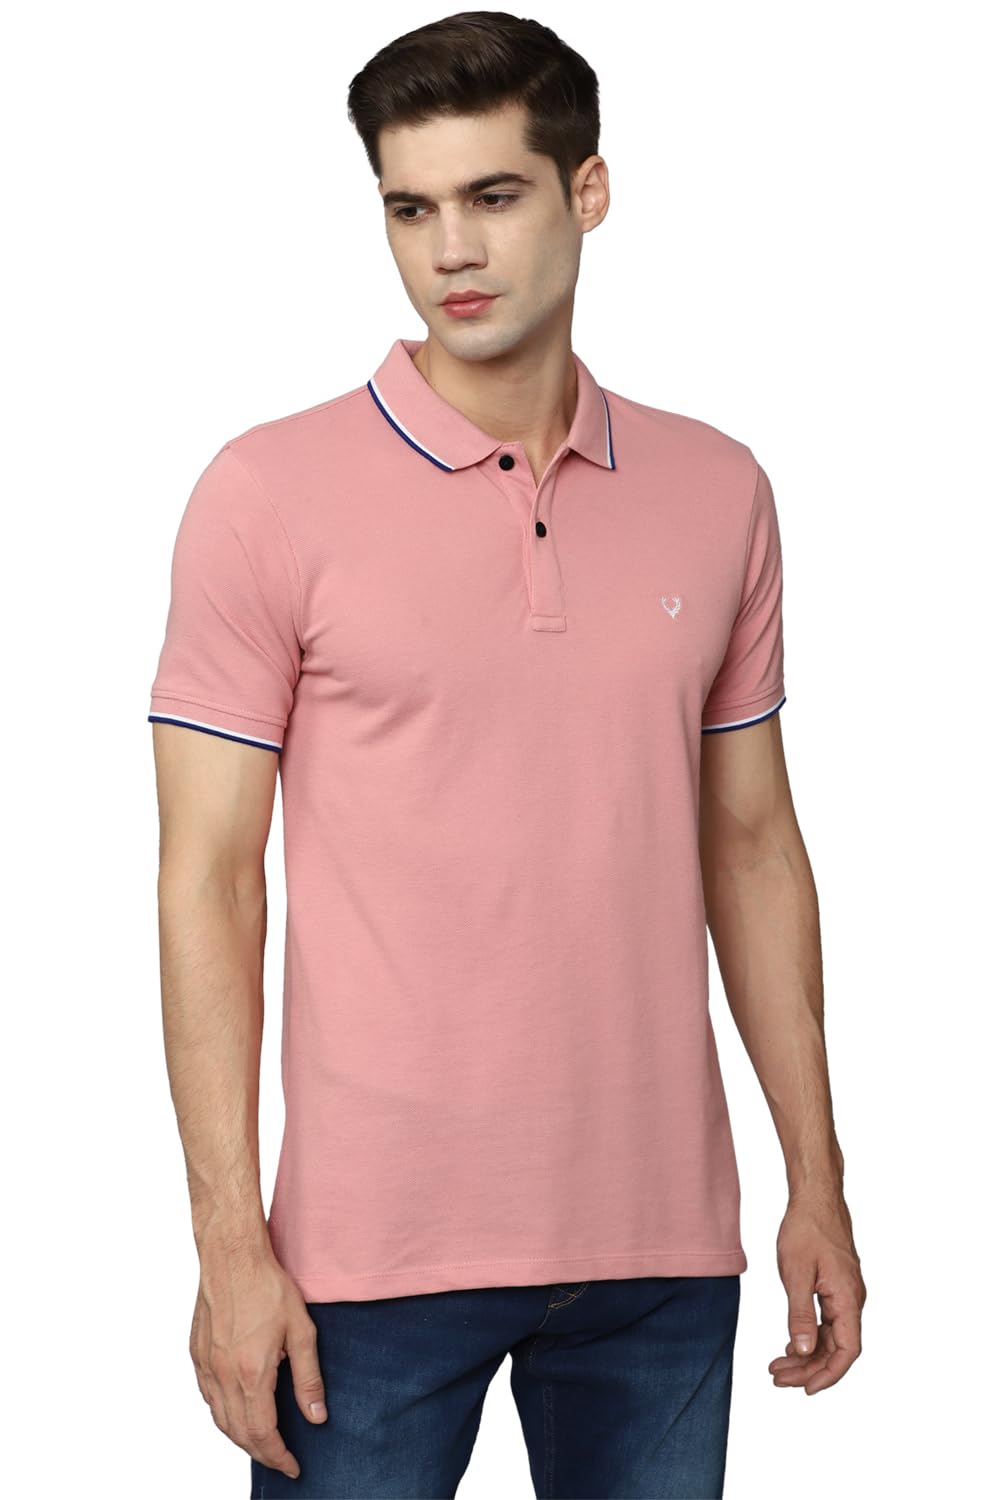 Allen Solly Men's Regular Fit T-Shirt (ASKPCURGF479080_Pink L)